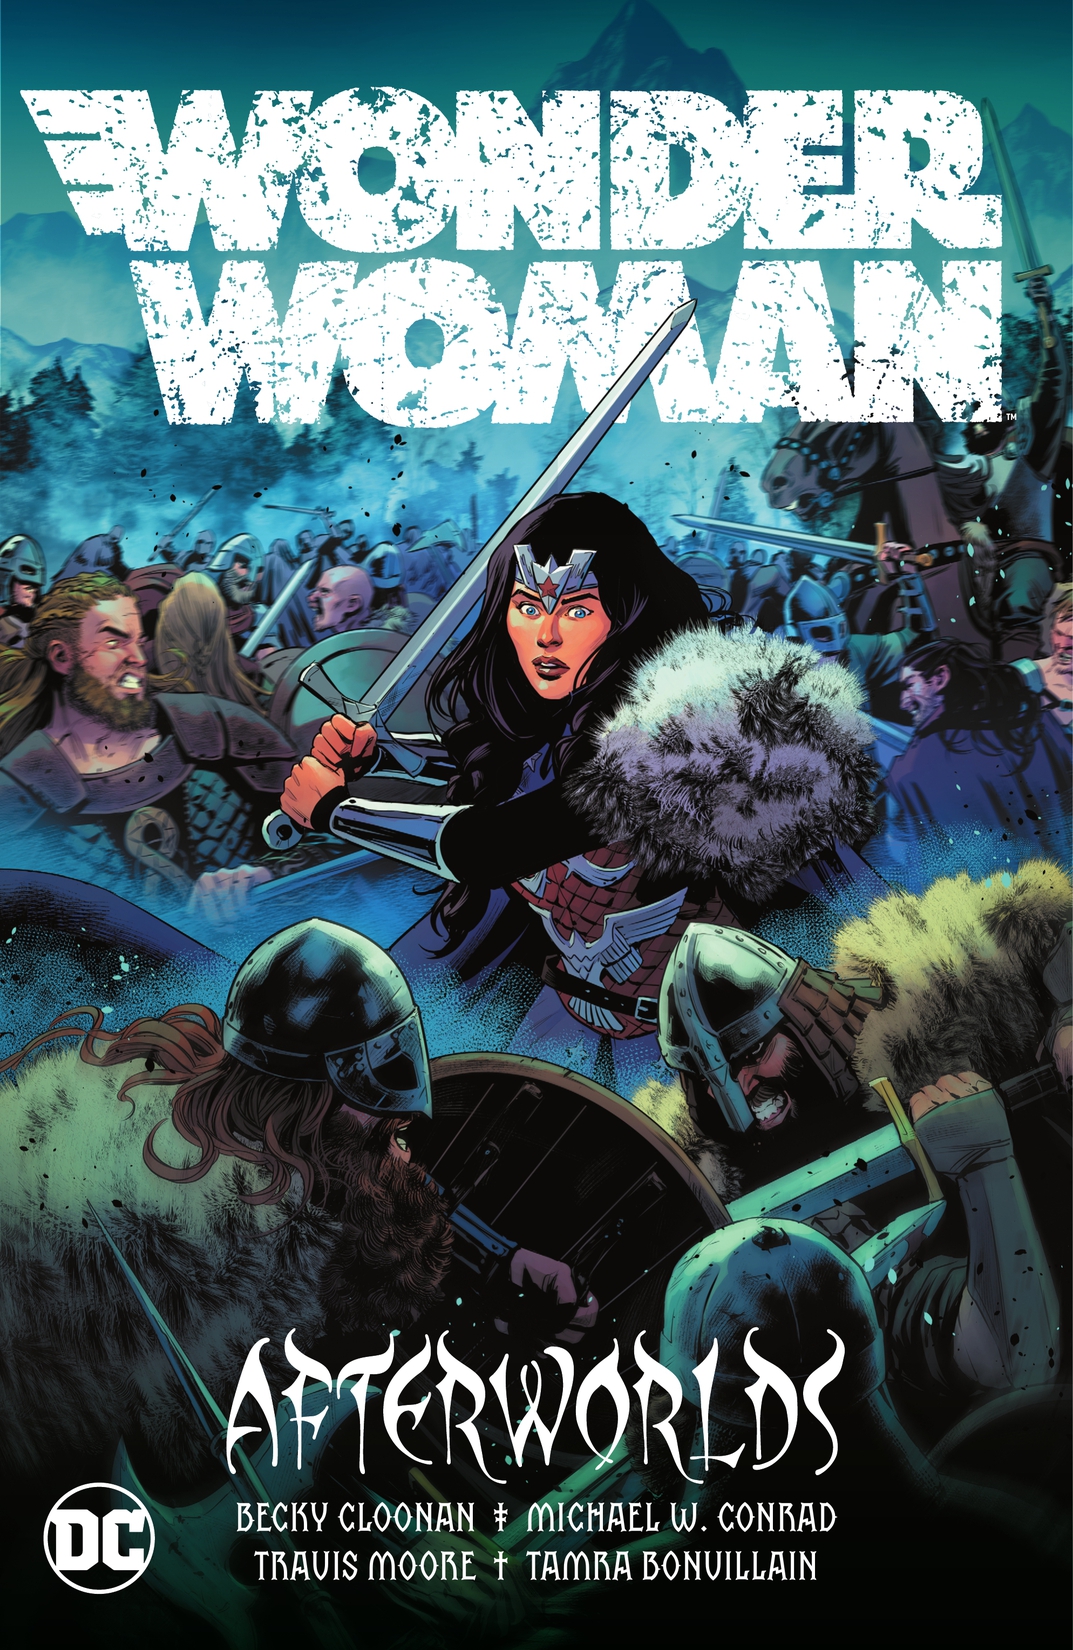 Wonder Woman Vol. 1: Afterworlds preview images